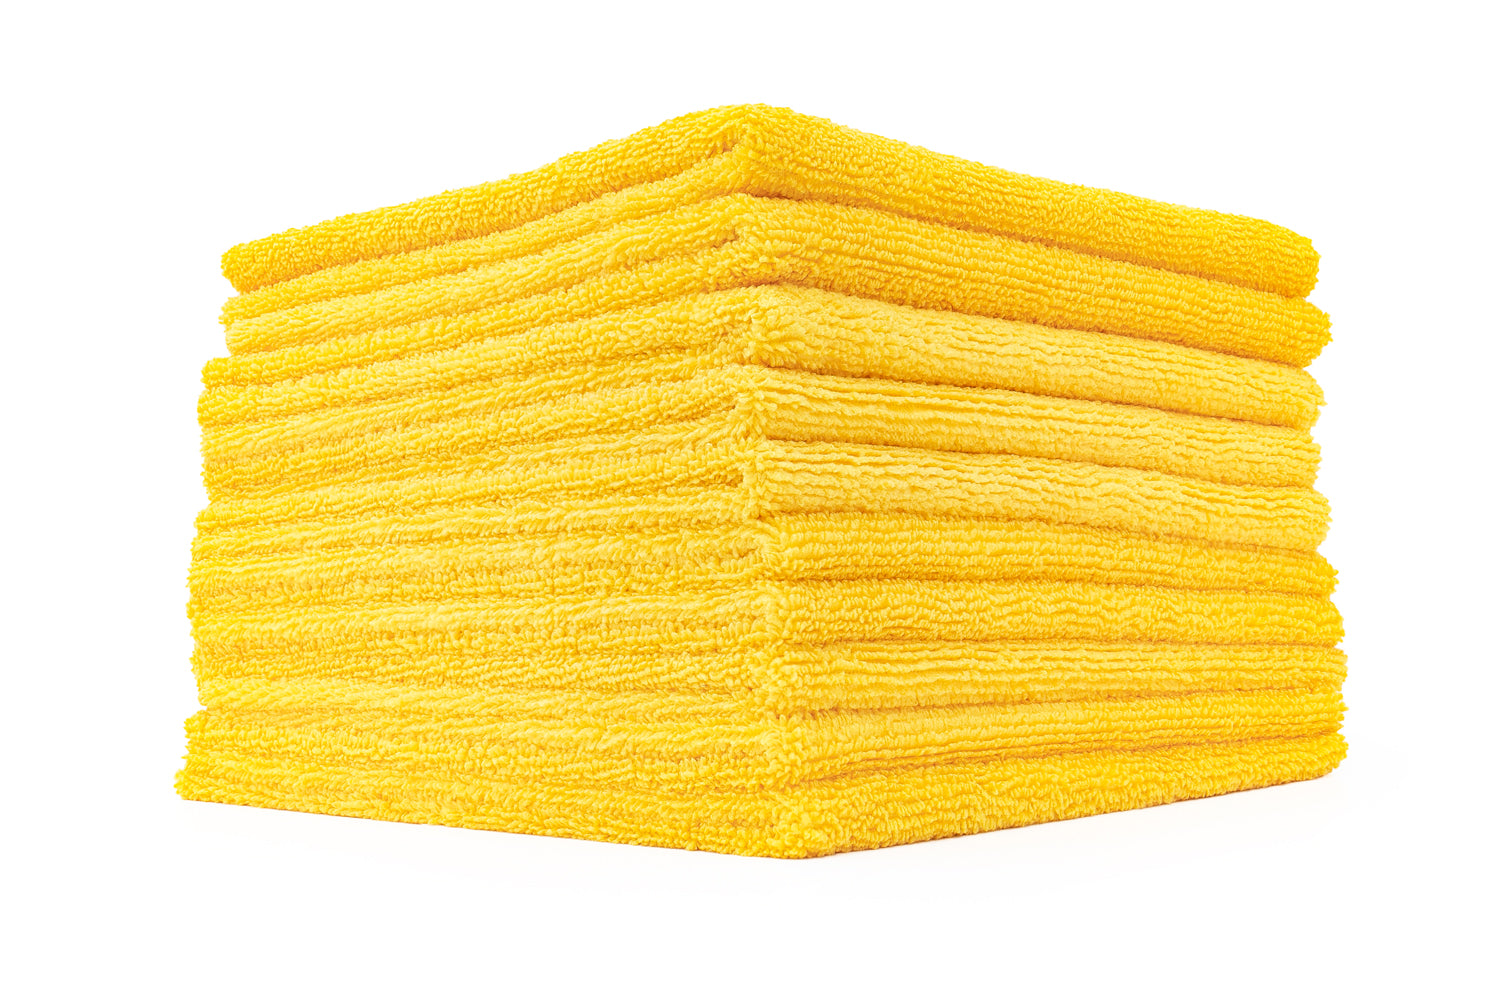 The Rag Company Edgeless 365 Premium 16 x 16 Microfiber Terry Towel - Gold